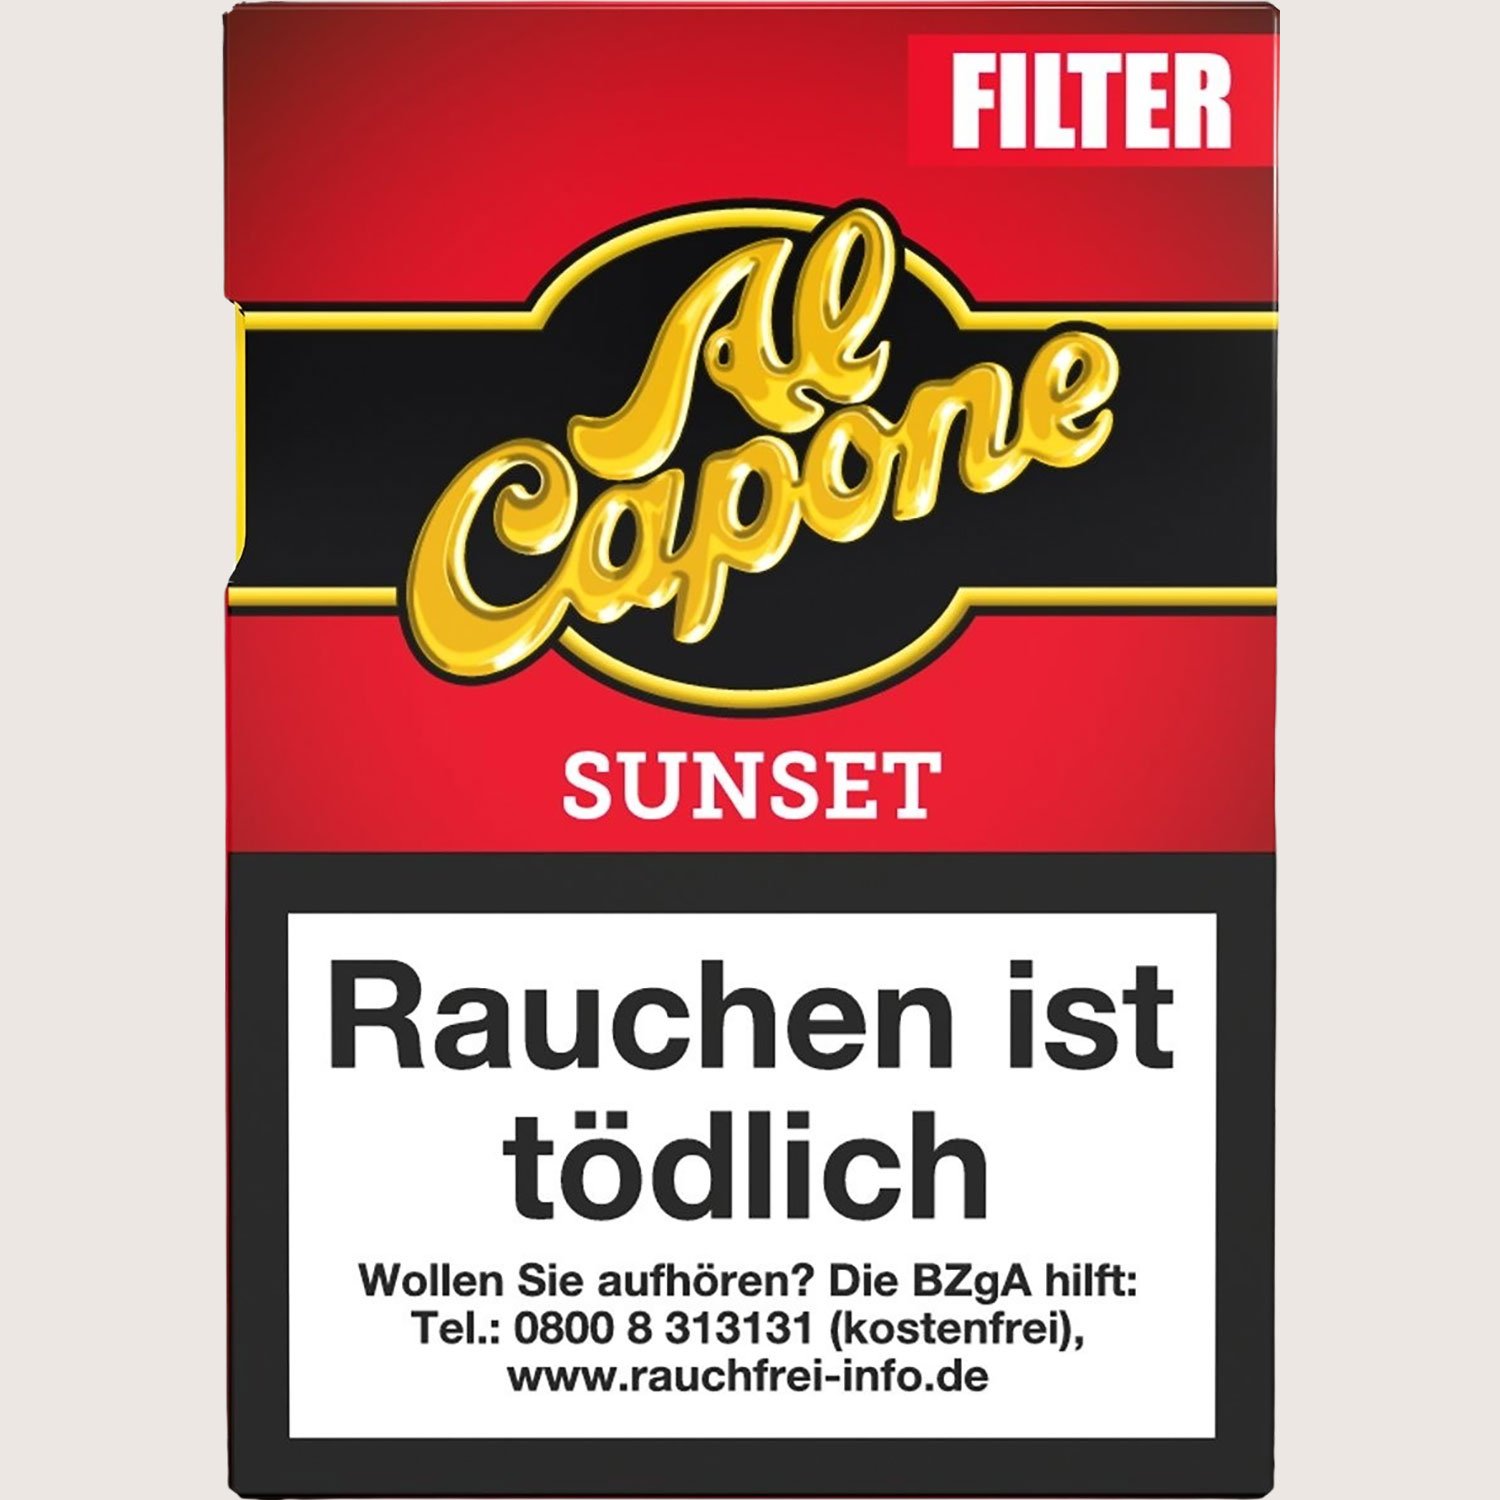 Al Capone Pockets Sunset Filter